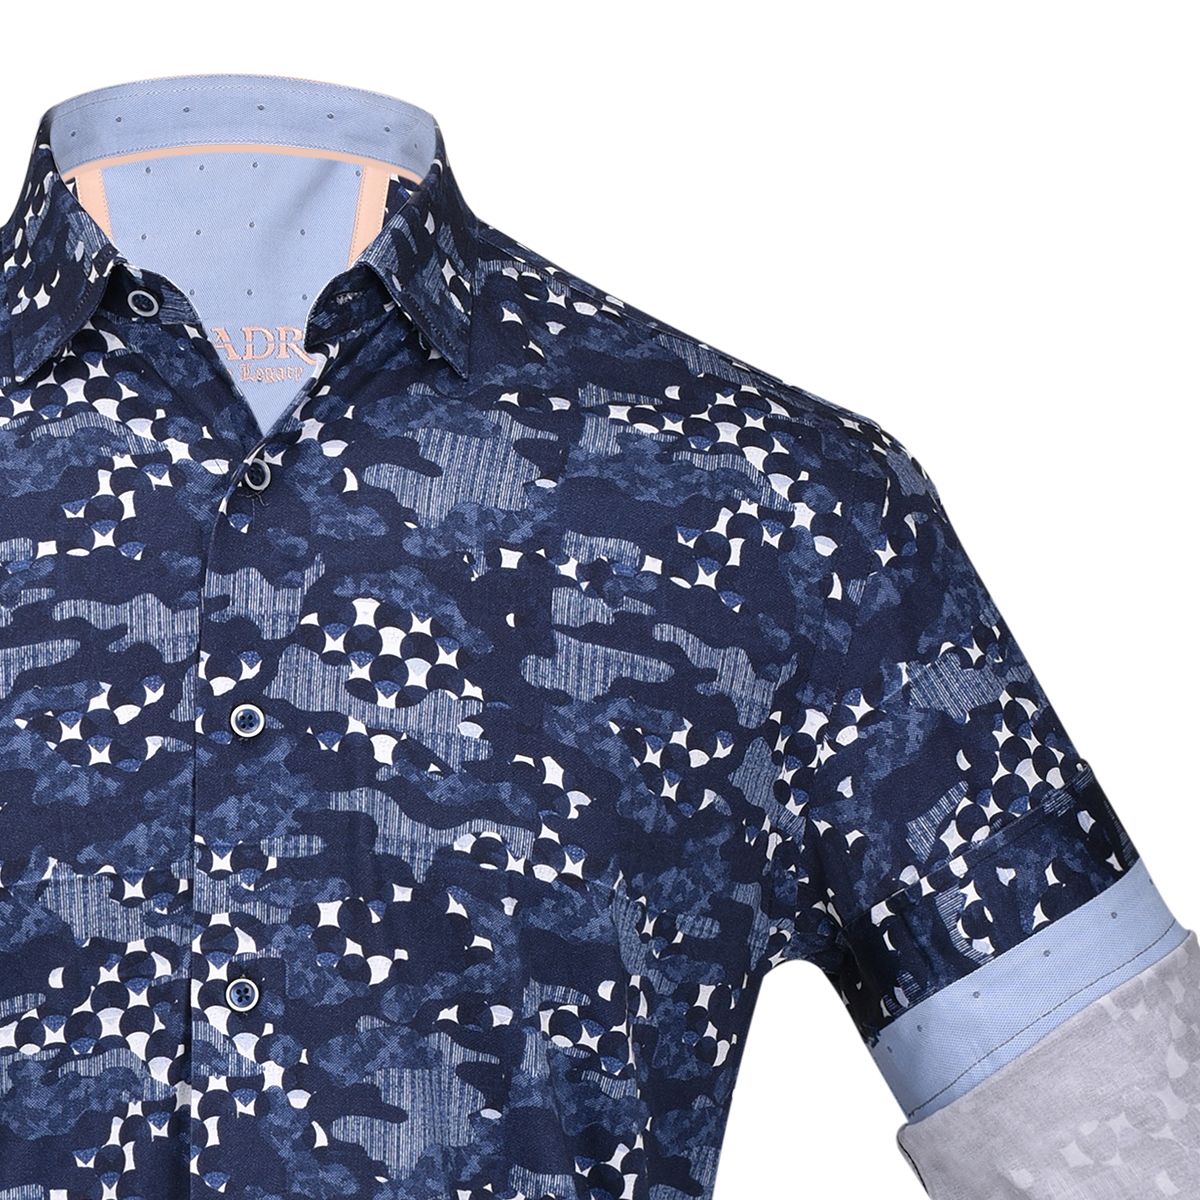 CM04642 - Cuadra blue casual fashion long sleeve cotton shirt for men.-CUADRA-Kuet-Cuadra-Boots